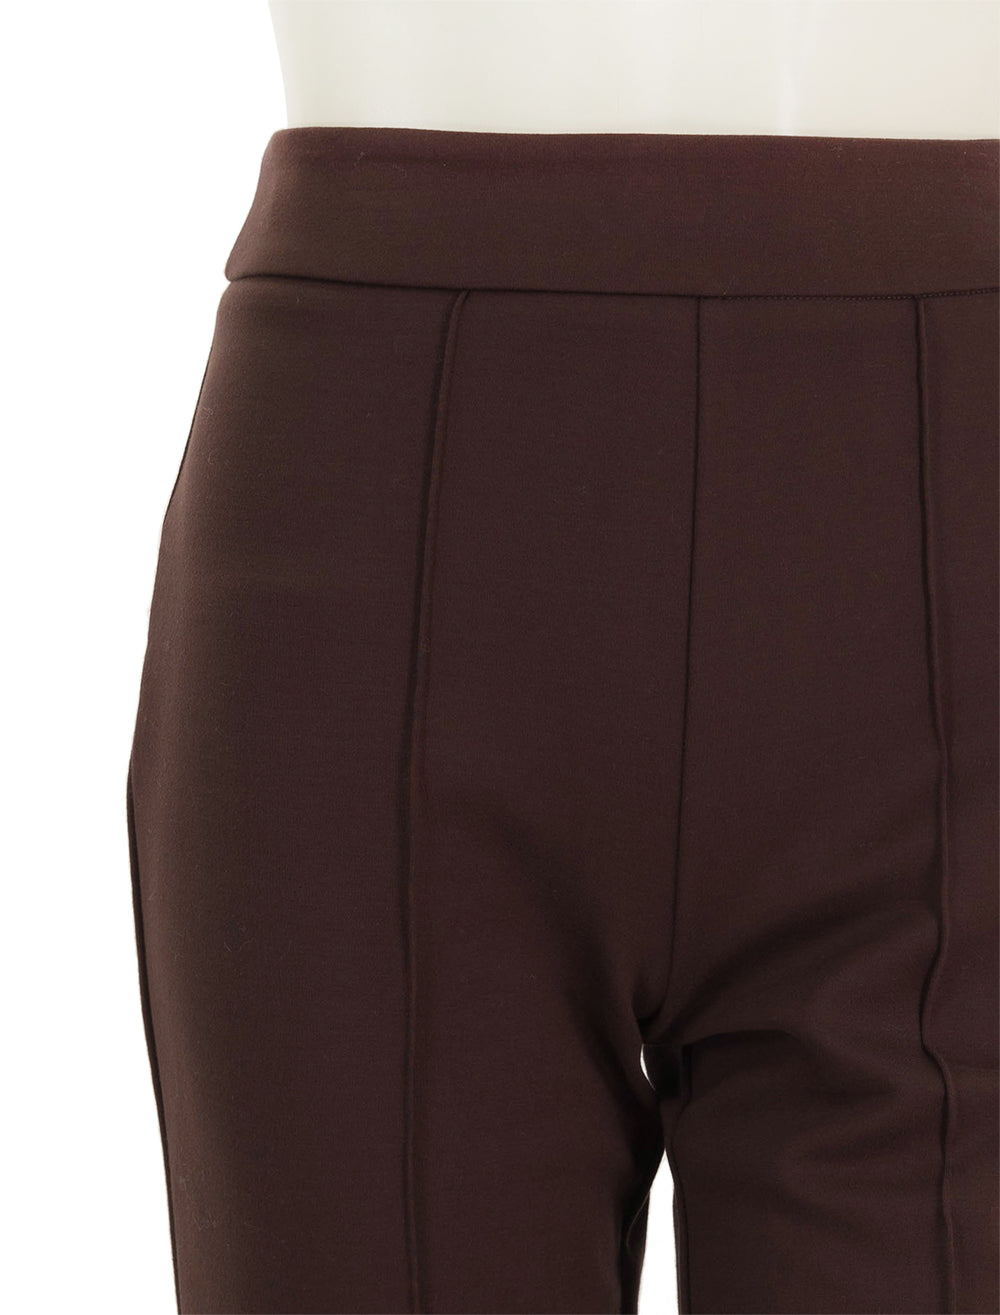 Close-up view of Staud's knack pant in dark chocolate.